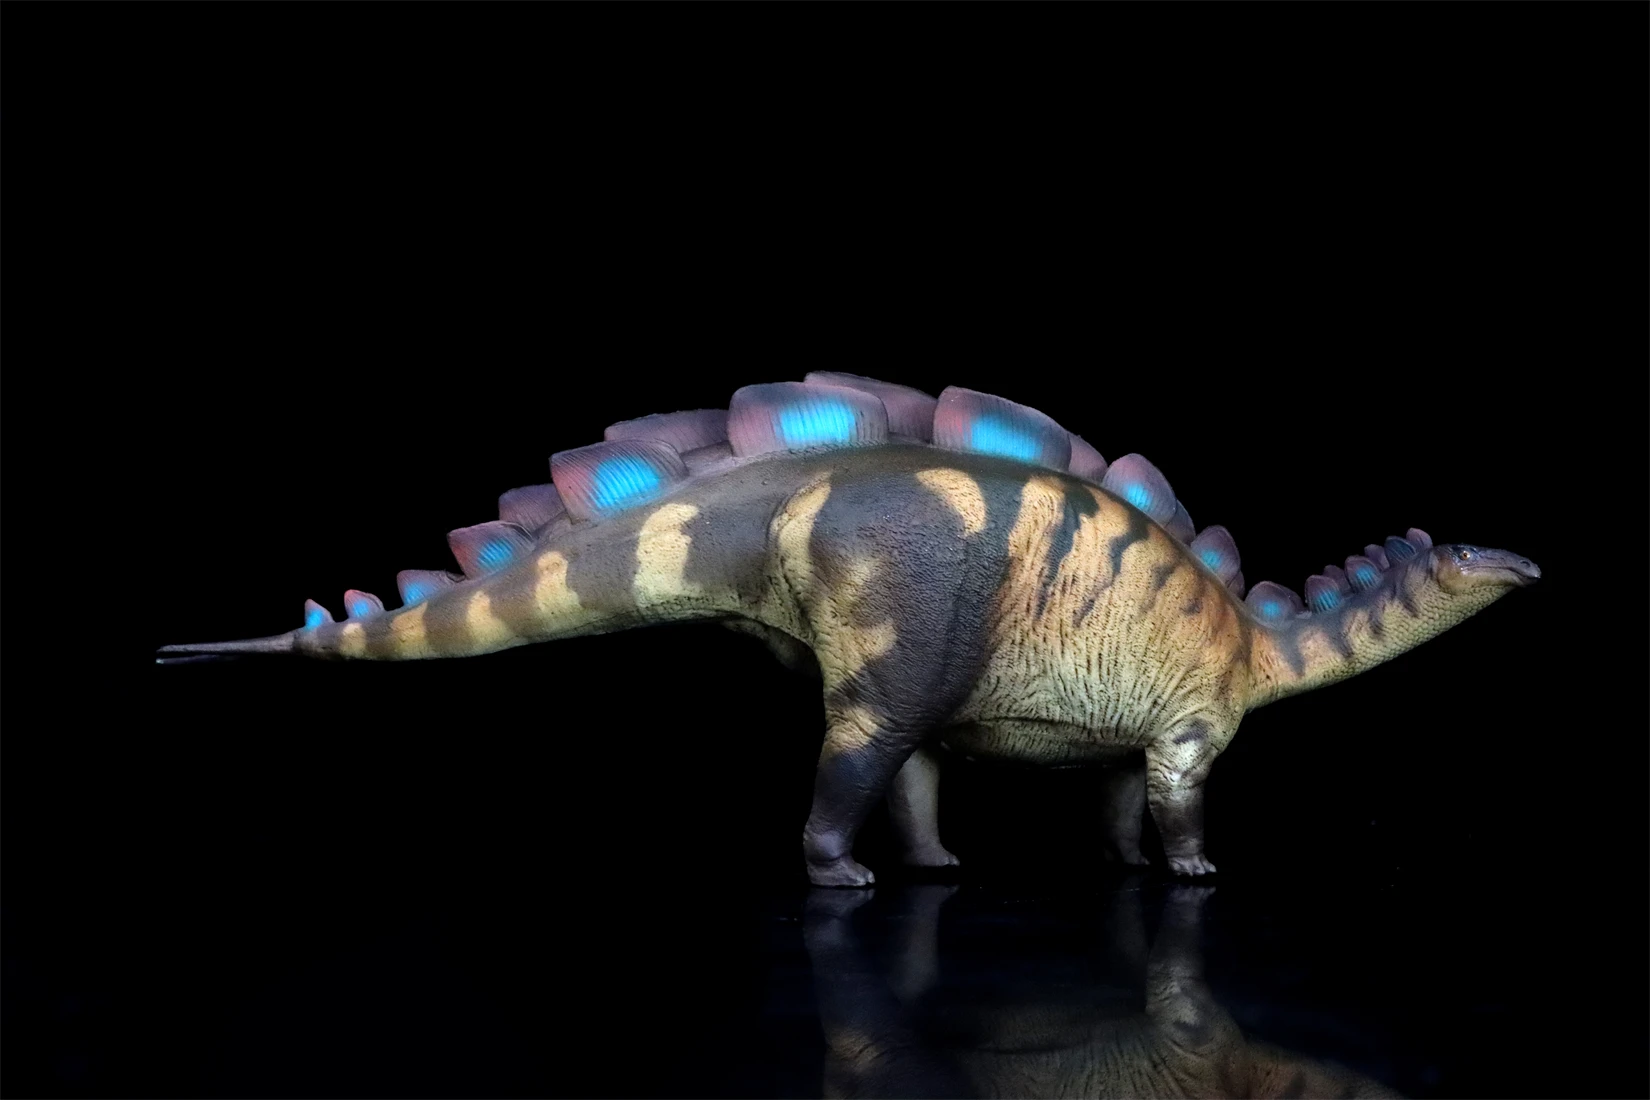 Pnso 82 wuerhosaurus xilin modell stegosauridae dinosaurier prä historische tiers zene dekoration geschenks ammlung wissenschaft liche statue